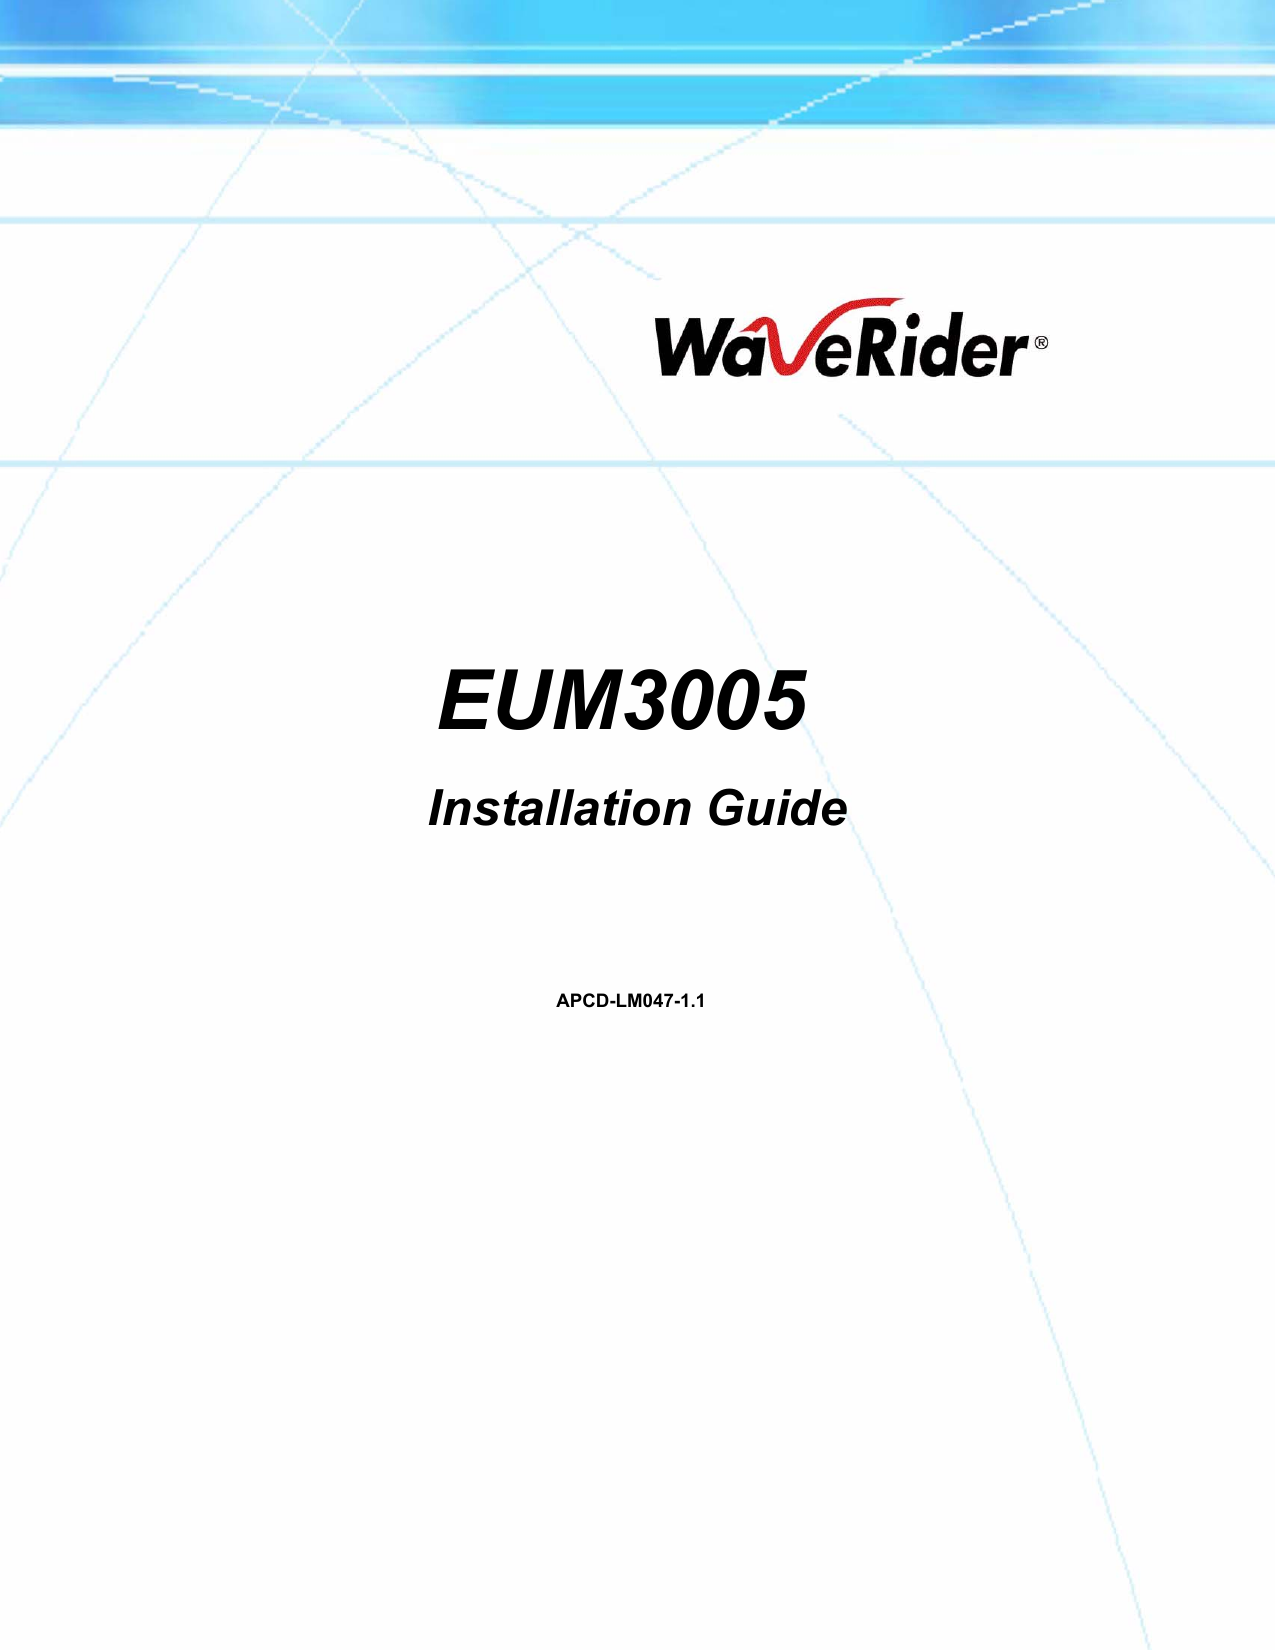                                                                                                                                                                                                                                                                                                                                                                                                                                                                                                                                                                                                                                                                                                                                                                                                                                                                                                                                                                                                                                                                                                                                                                                                                                                                                                                                                                                                                                                                                                                                                                                                                                                                                                                                                                                                                                                                                                                                                                                                                                                                                                                                                                                                                                                                                                                                                                                                                                                                                                                                                                                                                                                                                                                                                                                                                                                                                                                                                                                                                                                                                                   EUM3005 Installation GuideAPCD-LM047-1.1